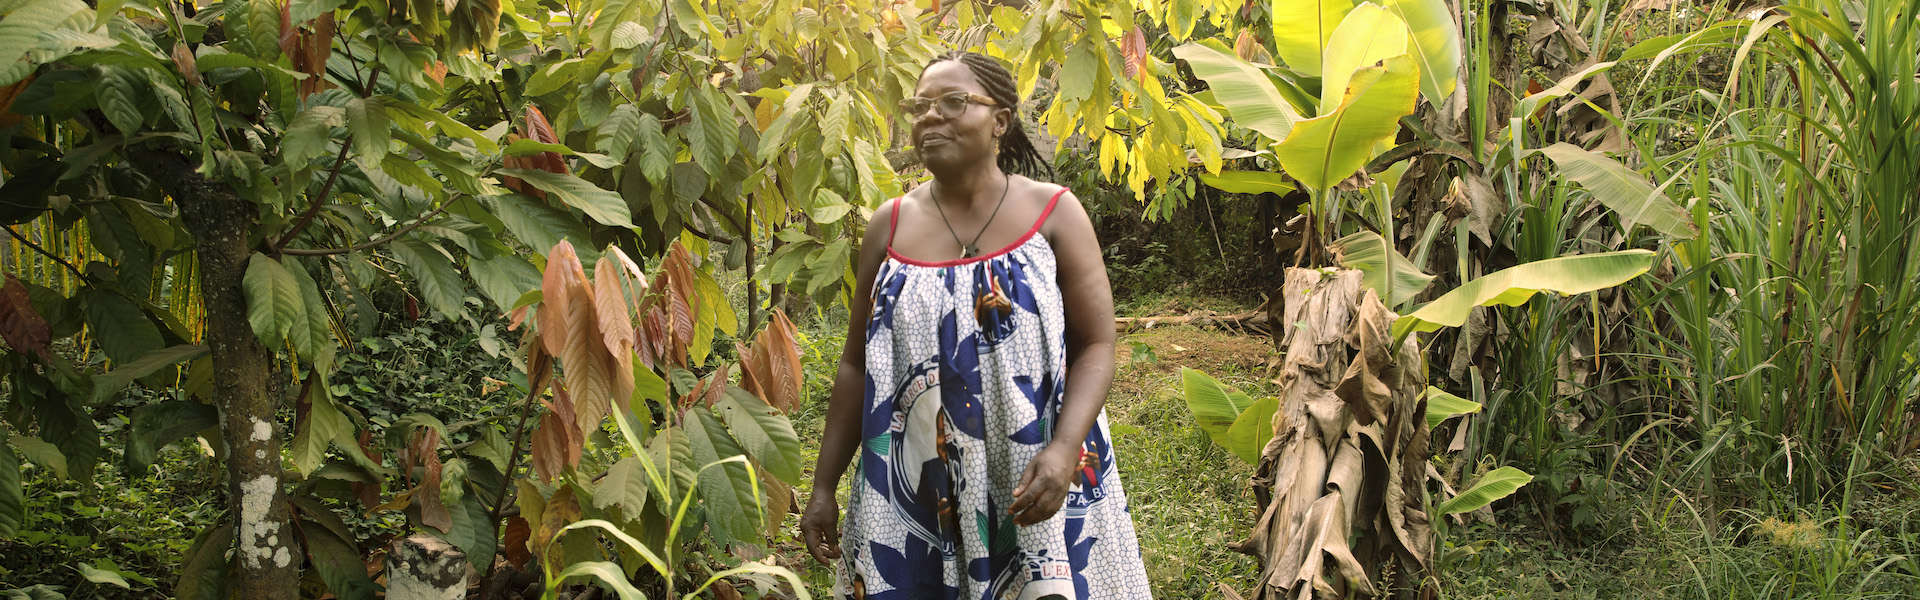 Female farmer in Africa